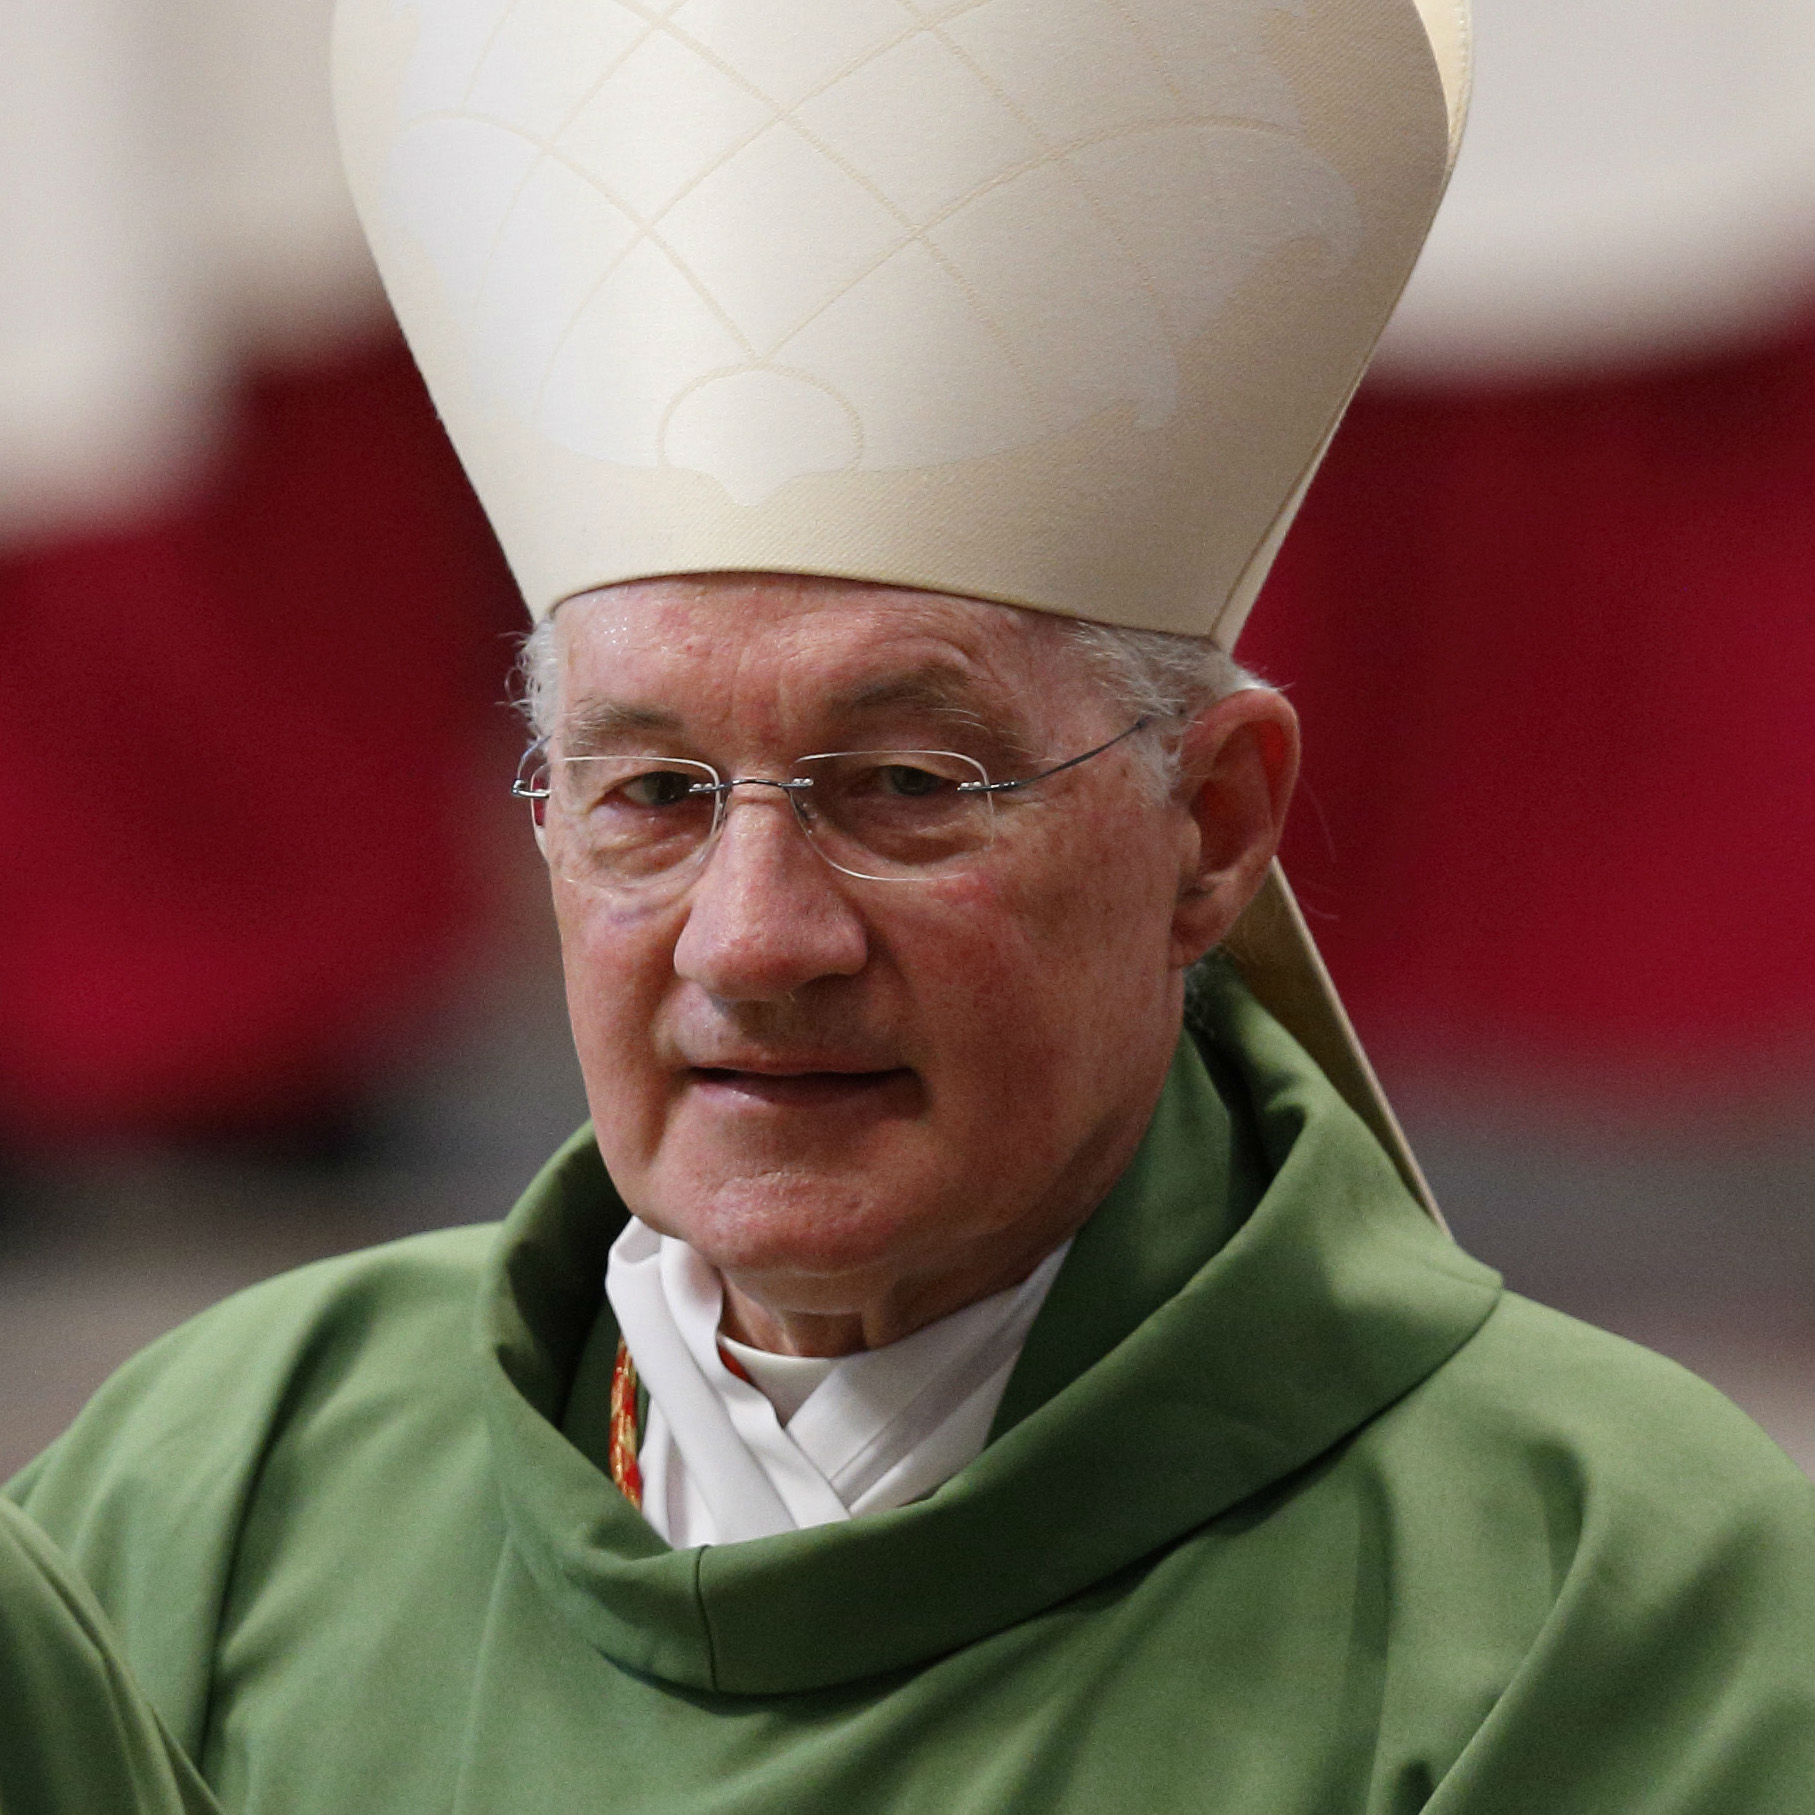 Canadian cardinal denounces 'unfaithful' and 'alarmist' interpretations of Amoris Laetitia